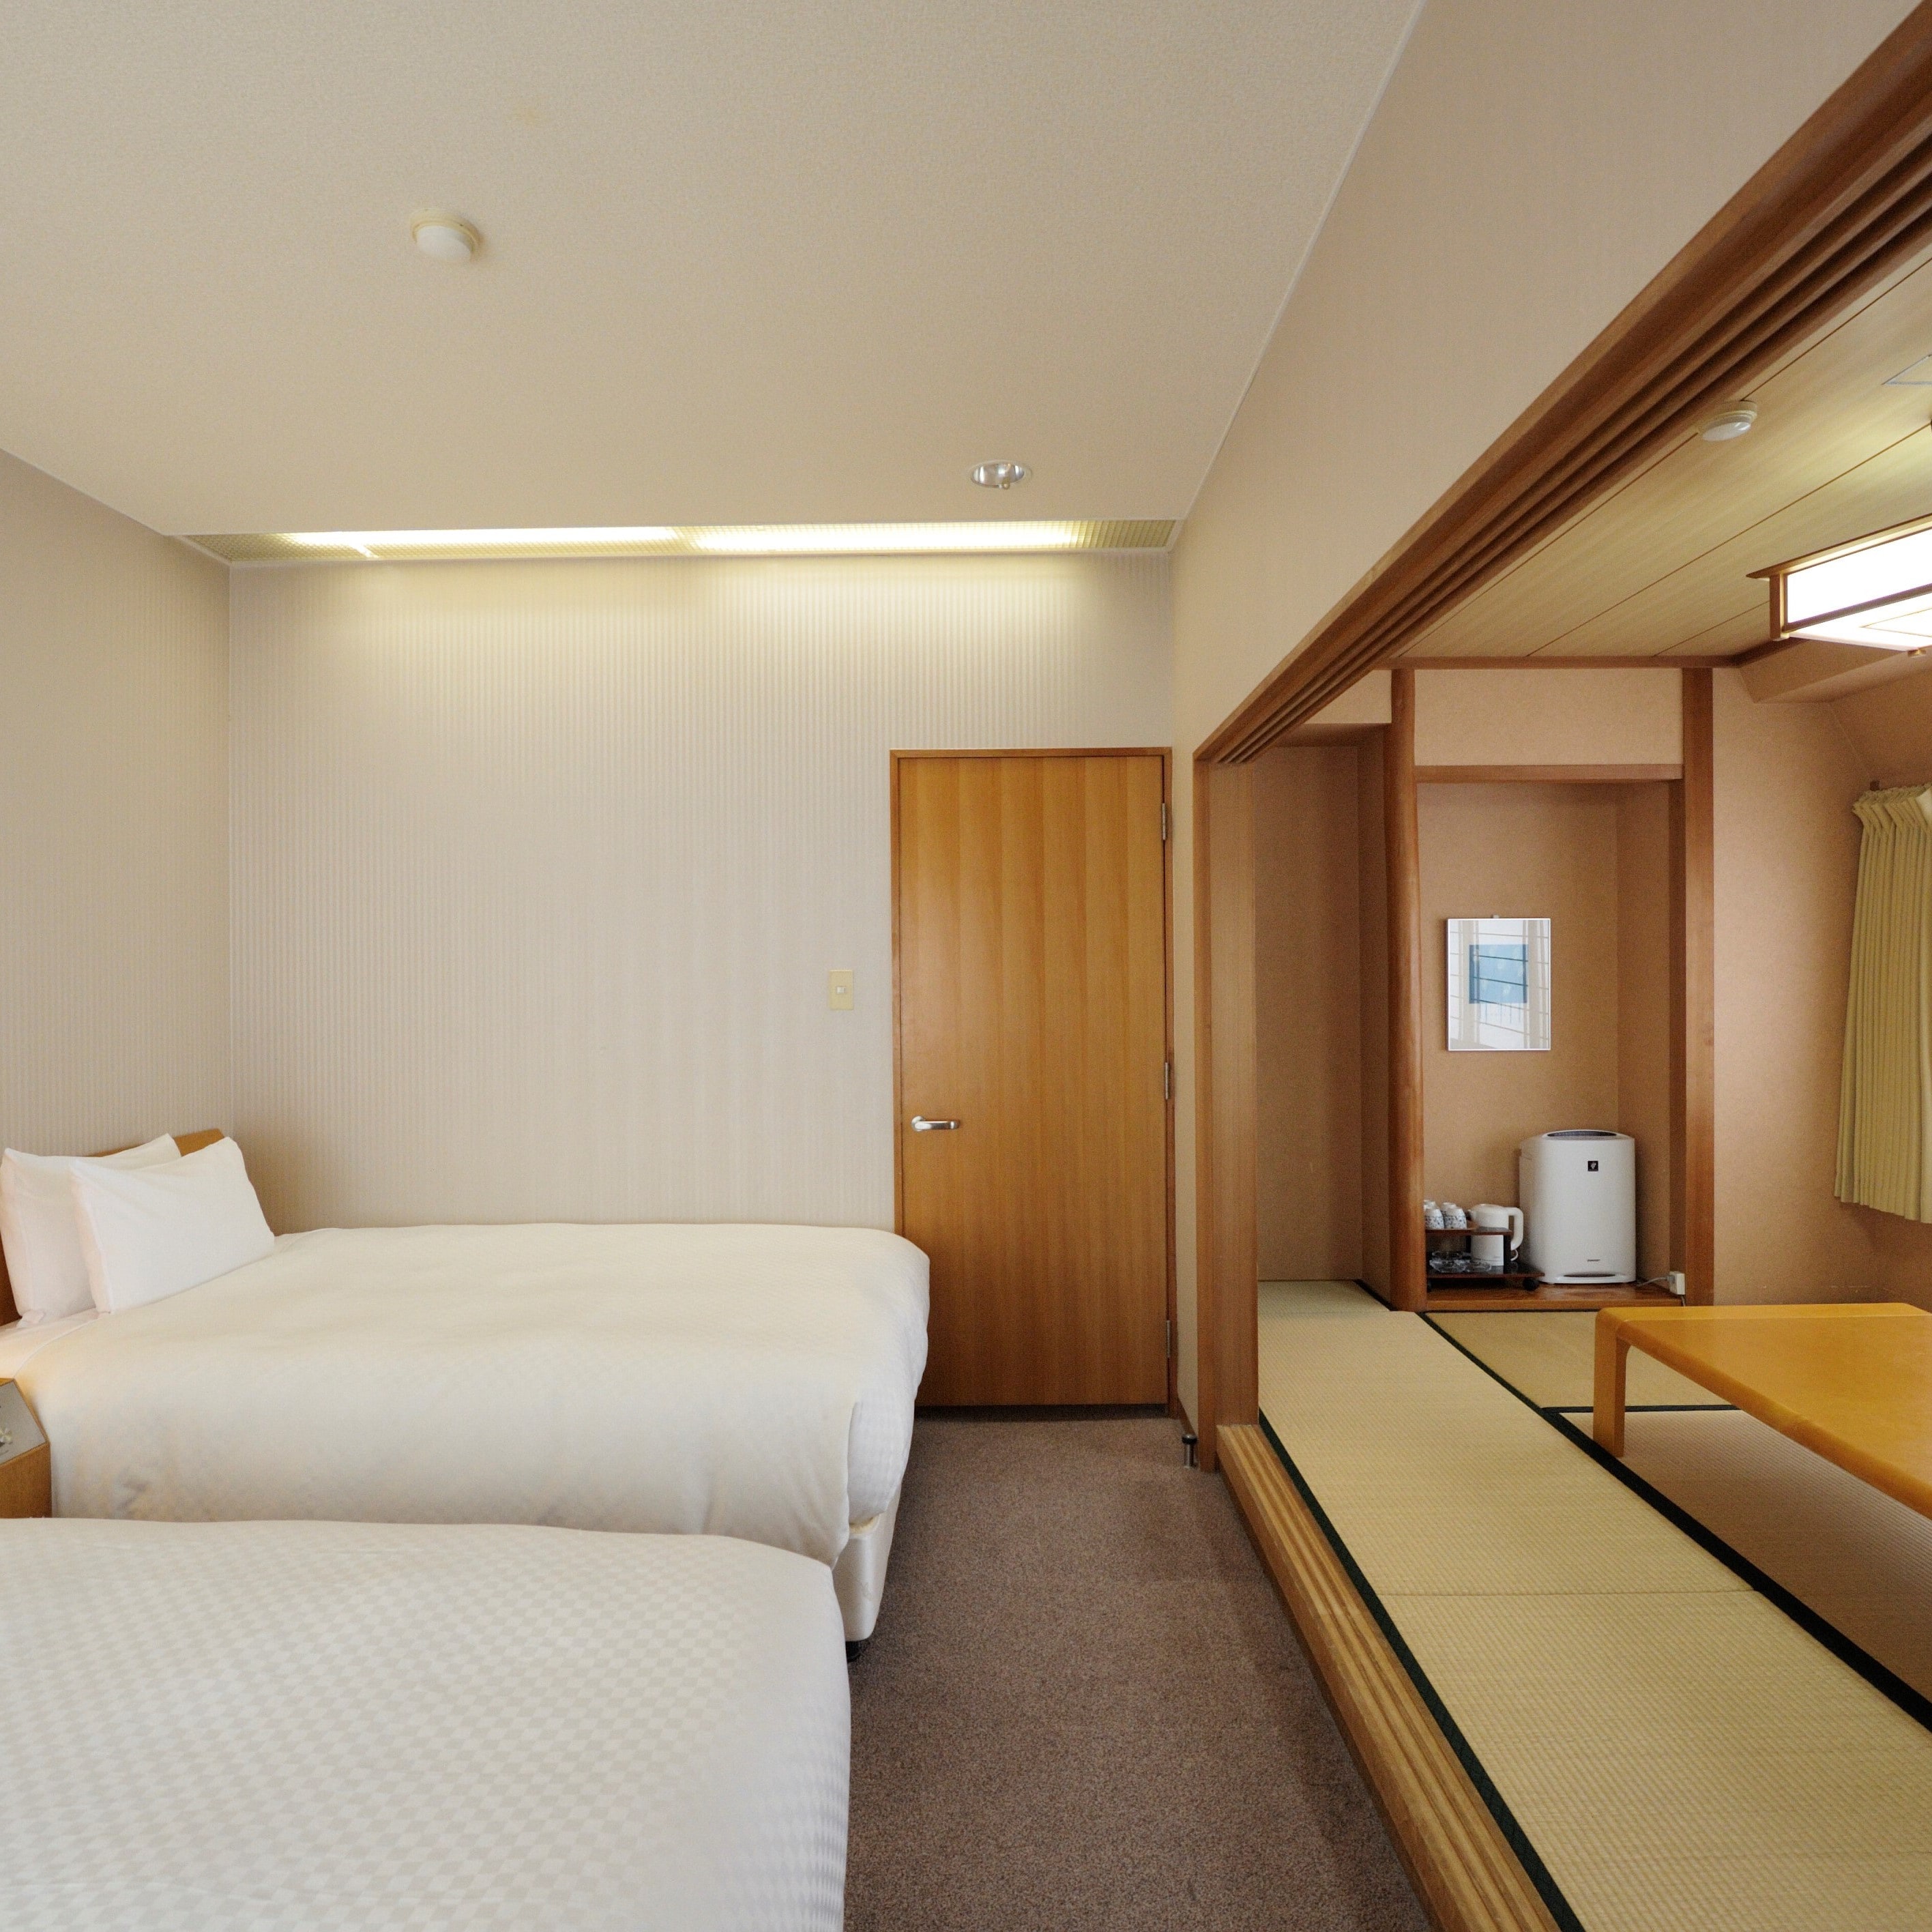 Top floor Japanese modern 30.0 square meters, 120 cm wide bed made by Slumberland + 3 futons